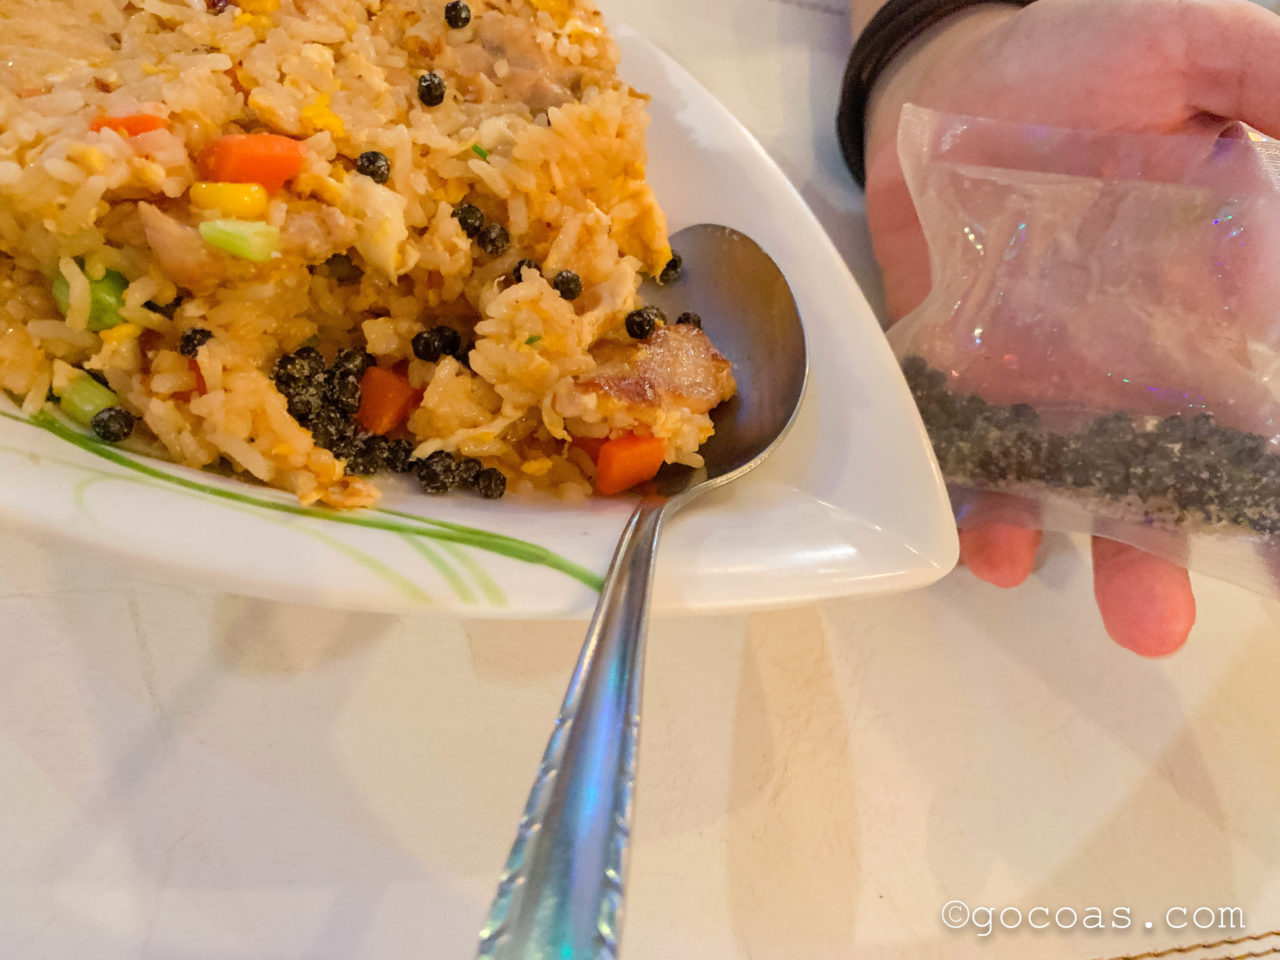 Garden Restaurantで炒飯にカンボジアの胡椒を使うところ